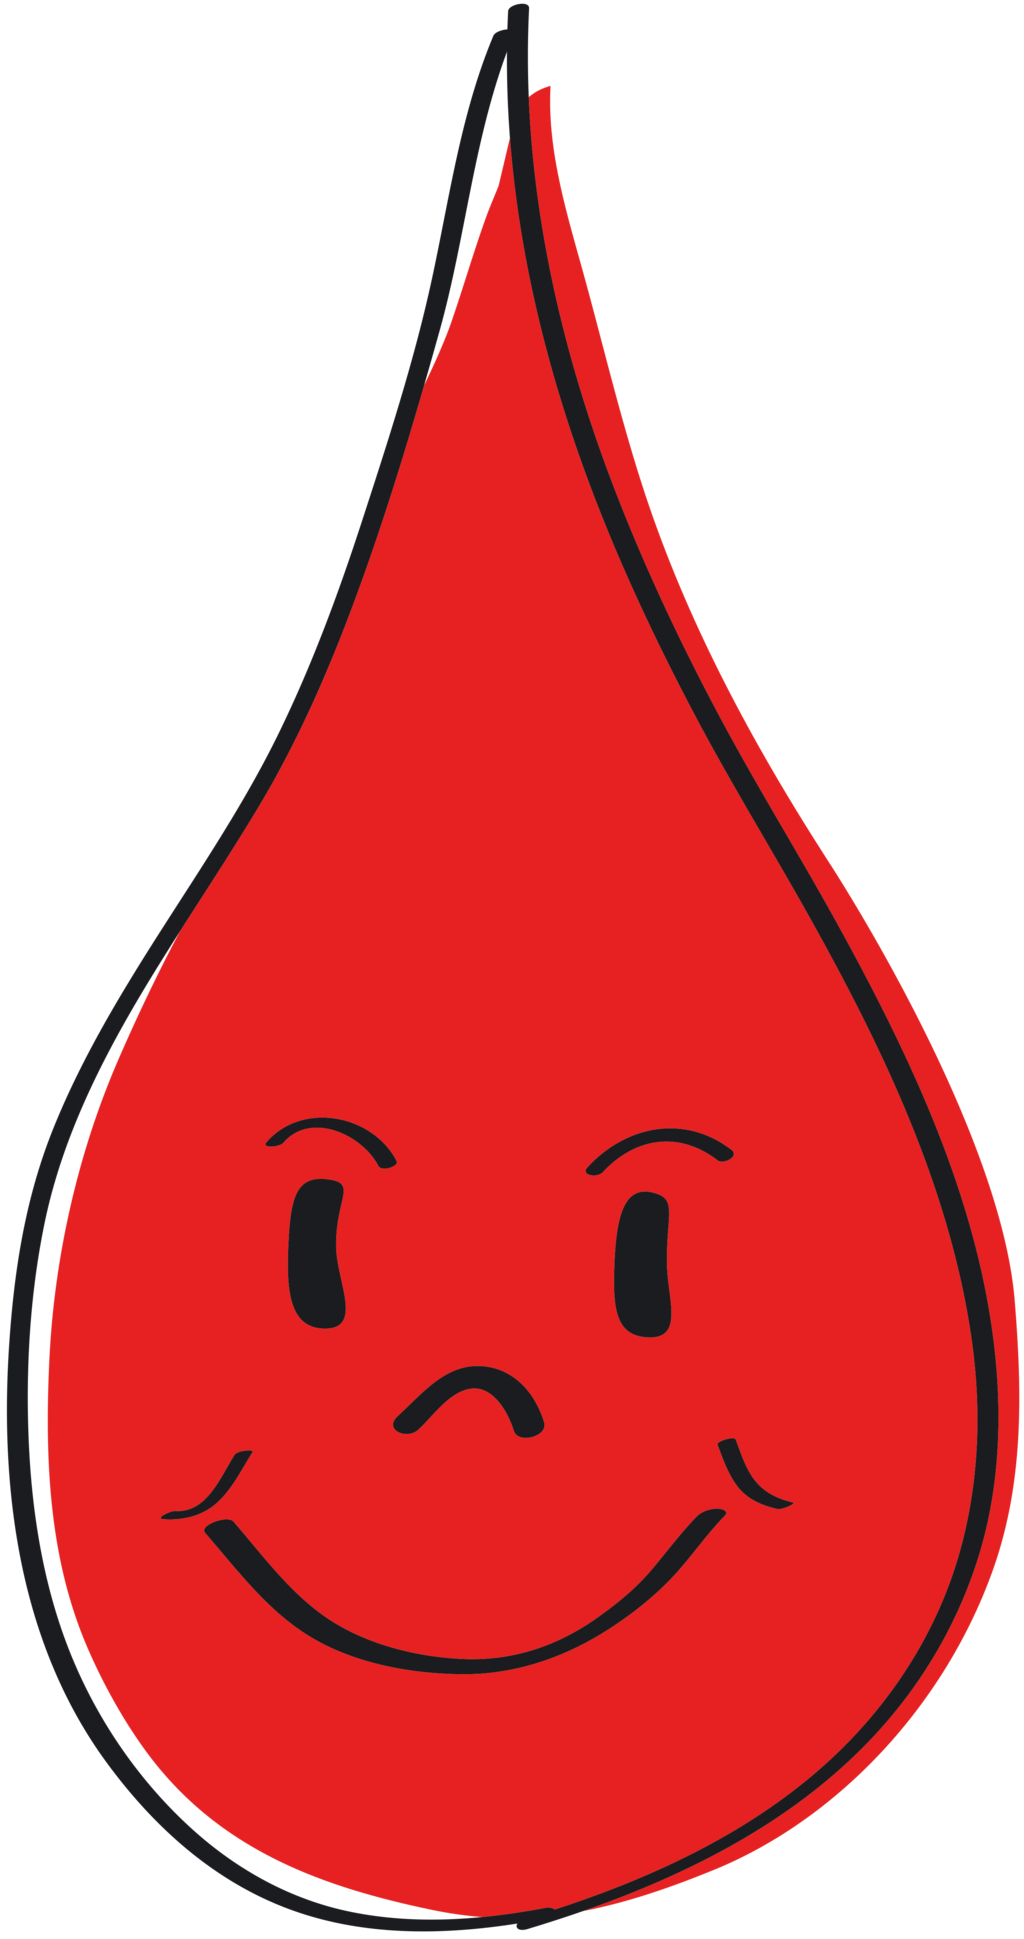 Blood drop drop blood 1 by davidrak clipart clipart